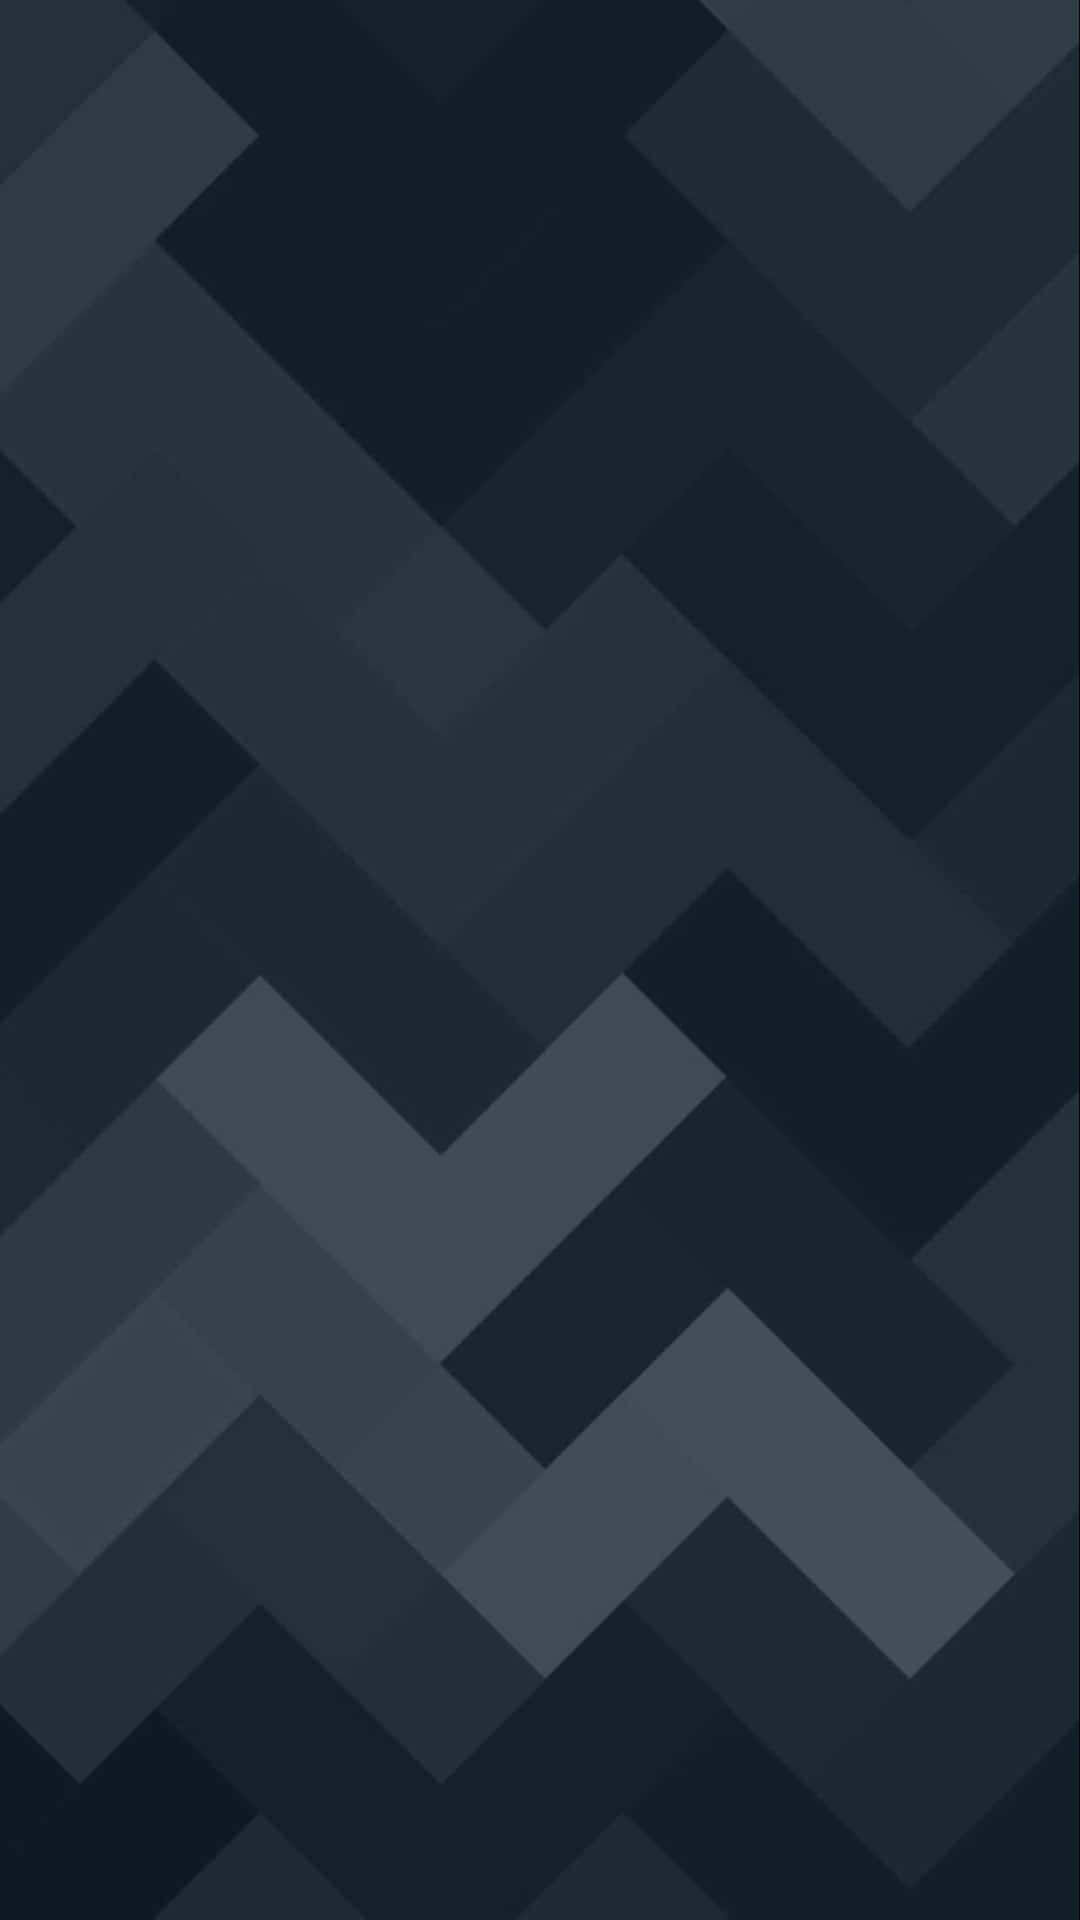 A Dark Blue And Gray Geometric Pattern Wallpaper